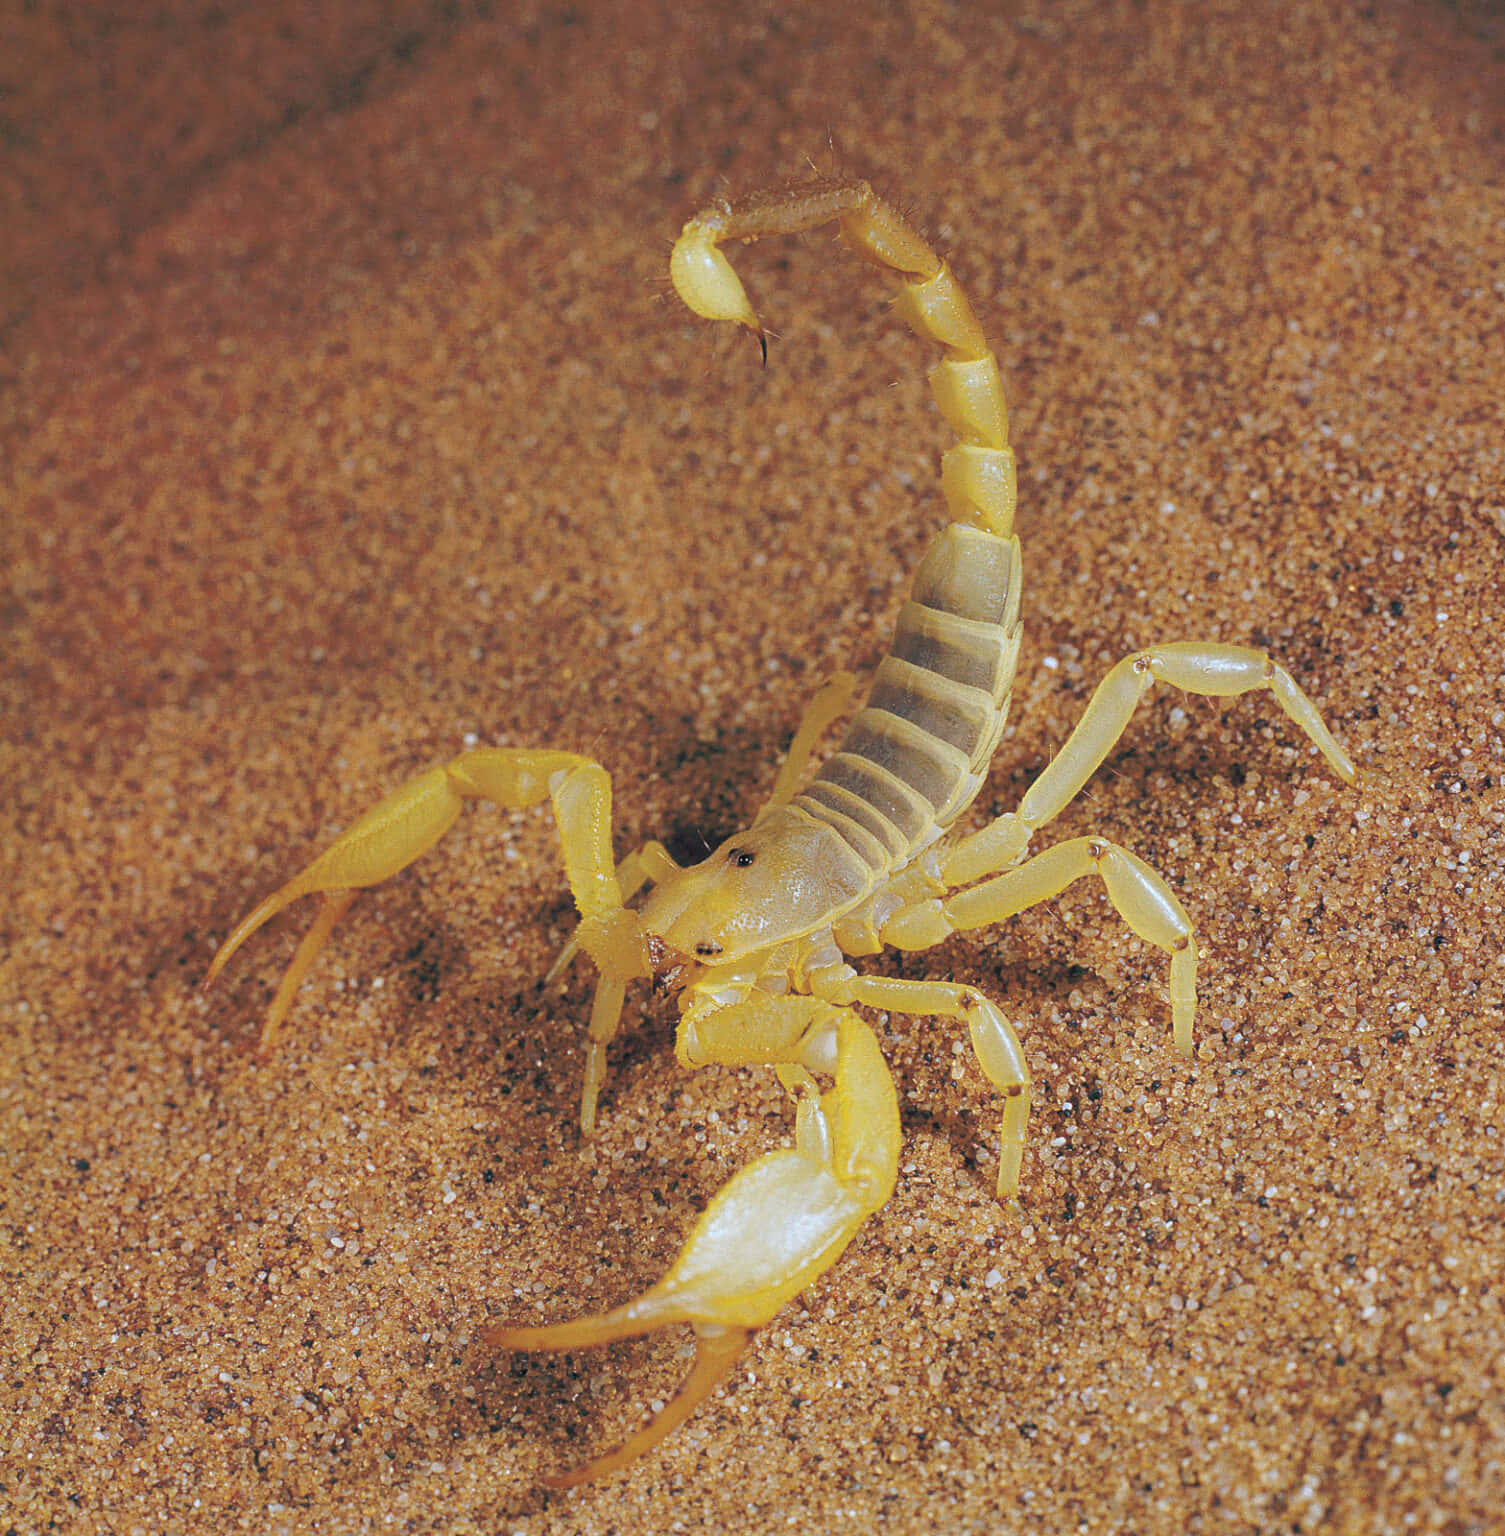 A Scorpion Is Walking On Sand